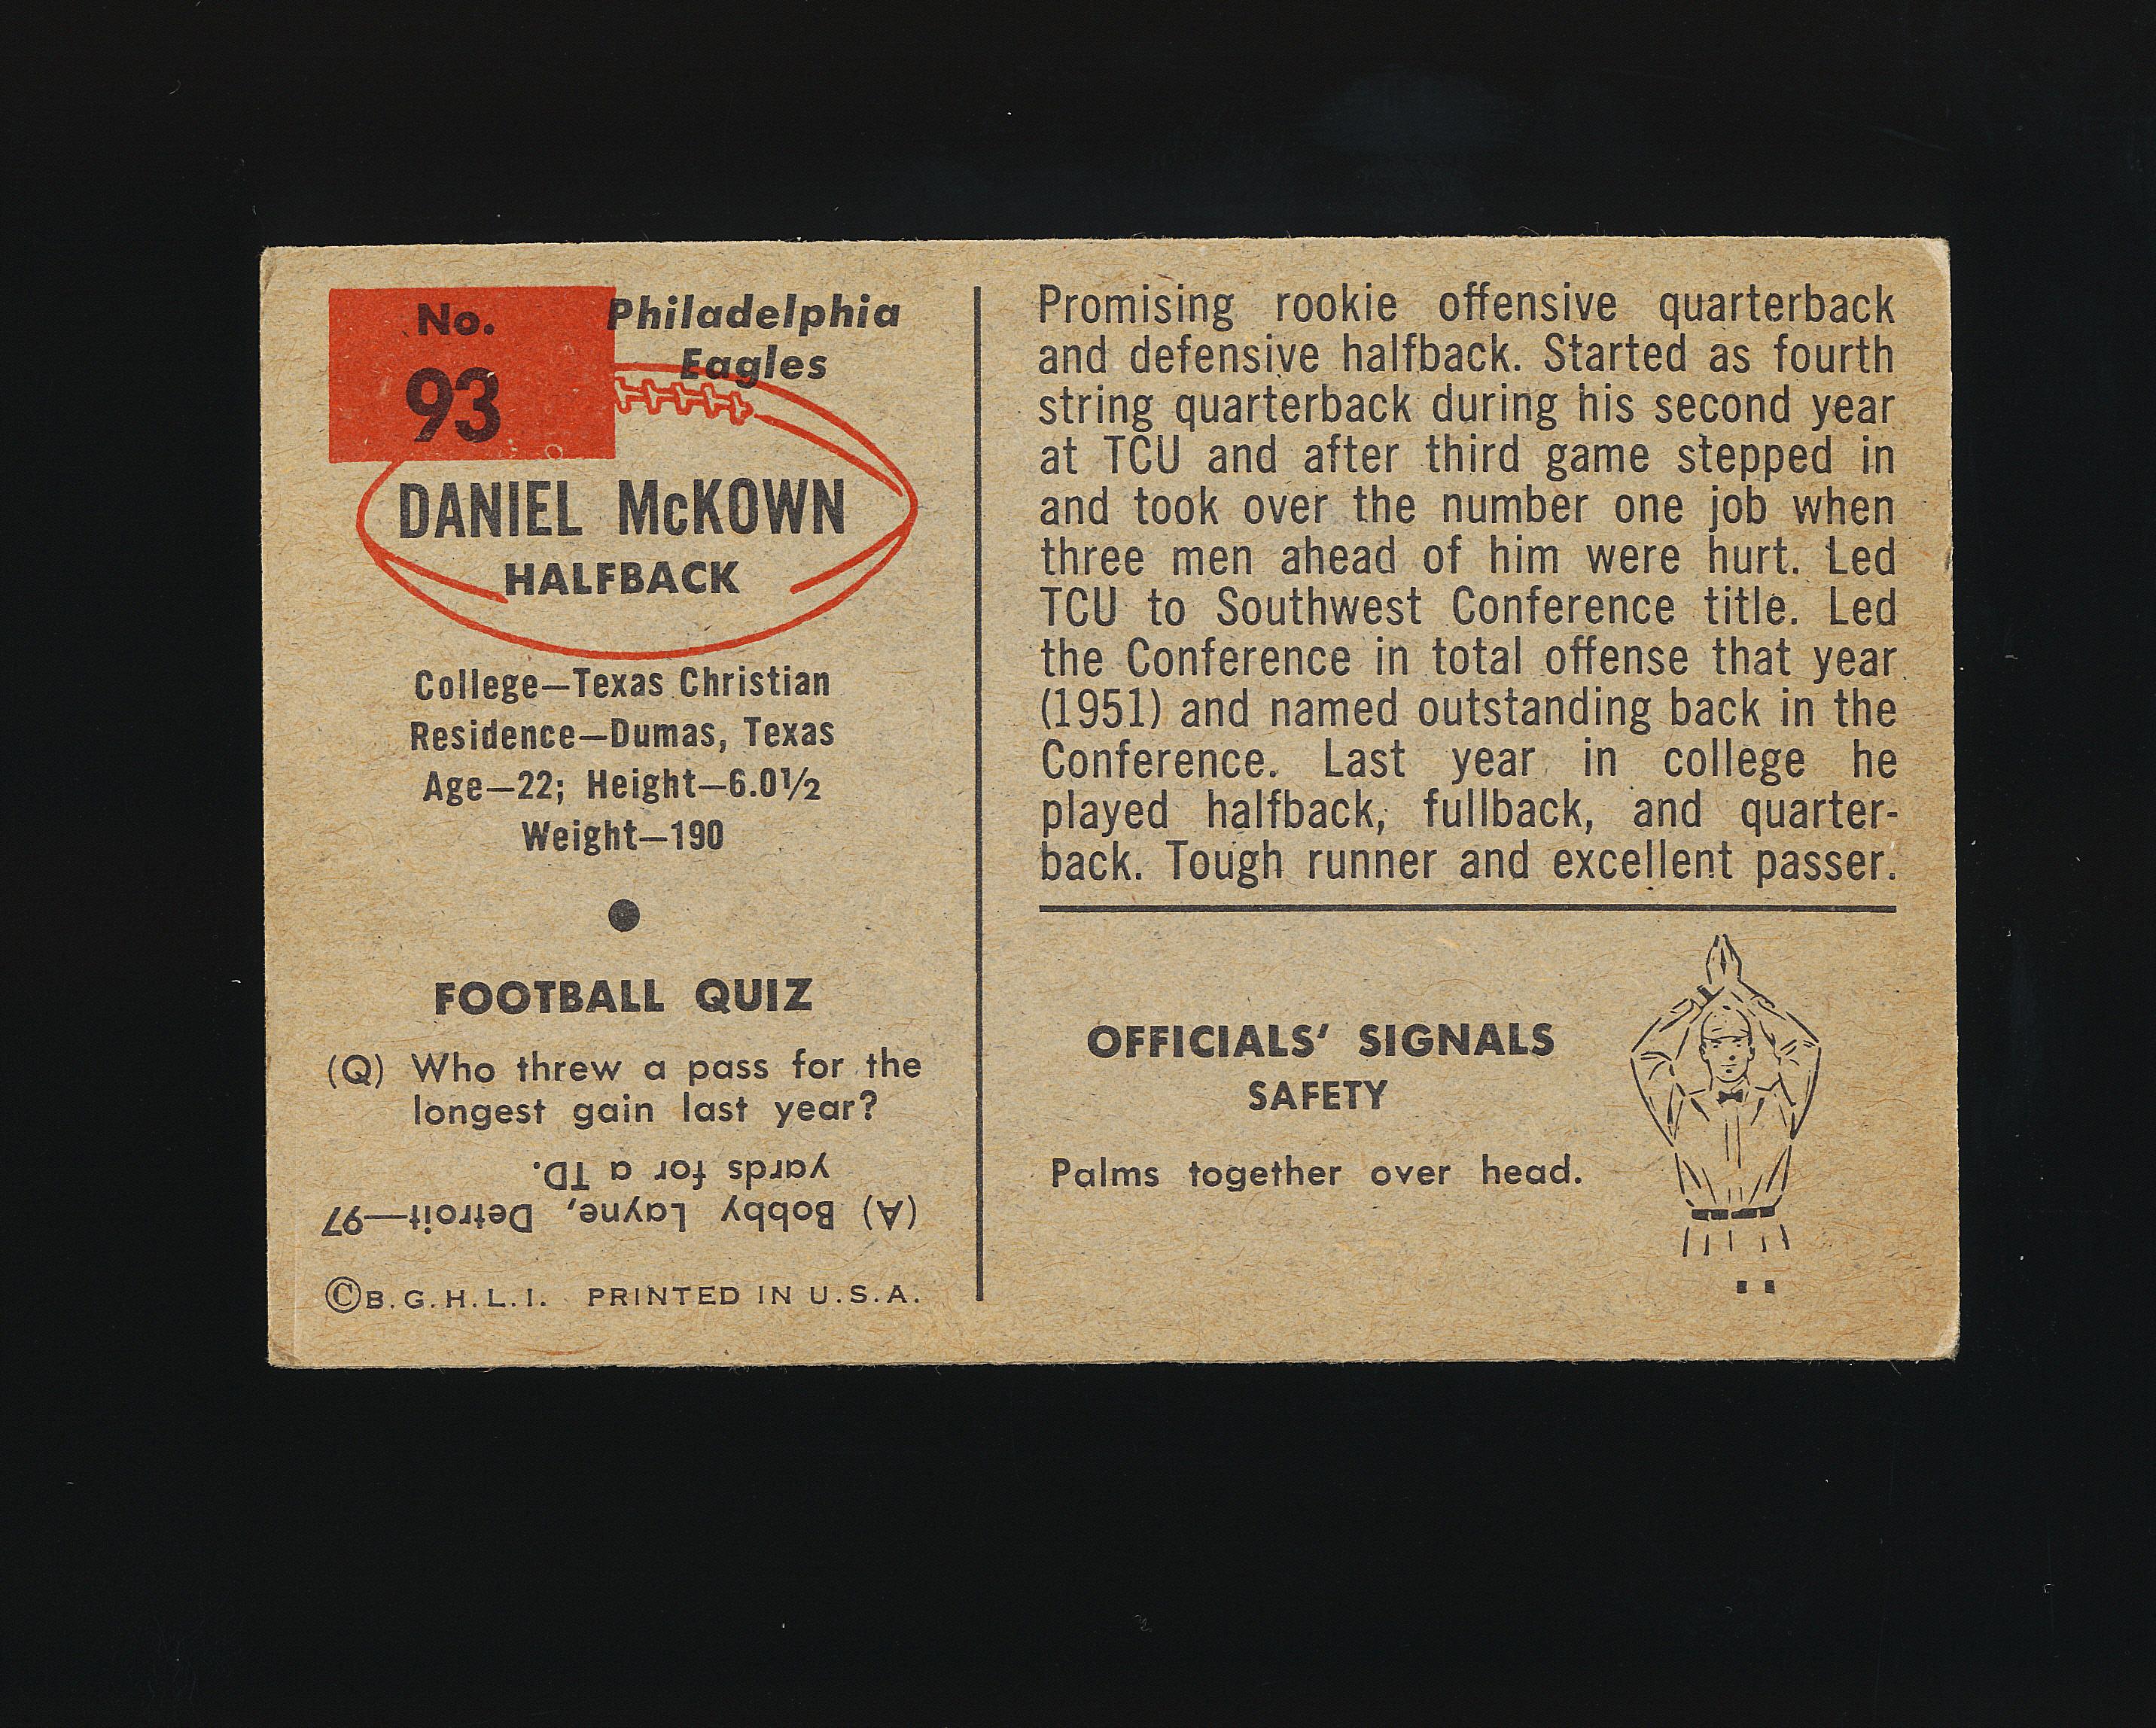 1954 Bowman ROOKIE Football Card #93 Rookie Daniel McKown Philadelphia Eagl